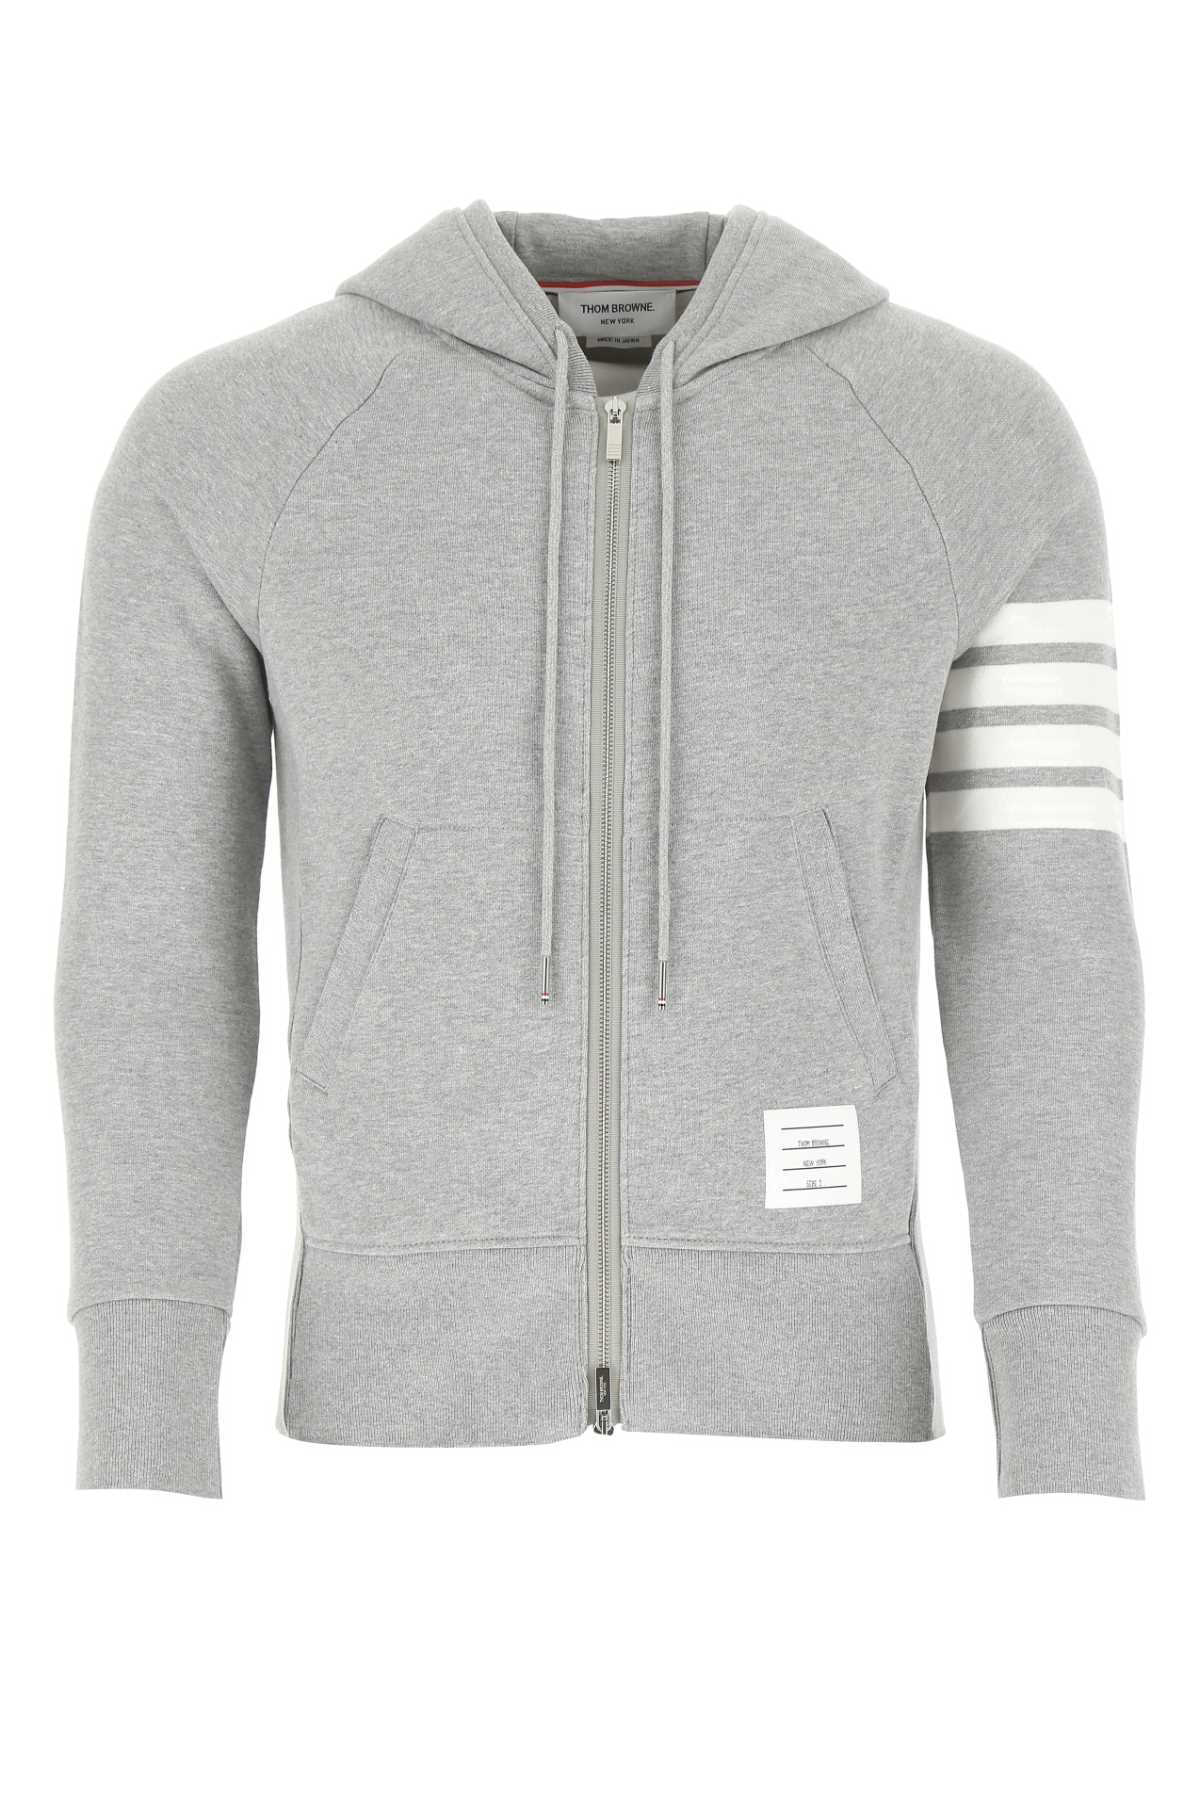 Thom Browne Melange Grey Cotton Sweatshirt In 068